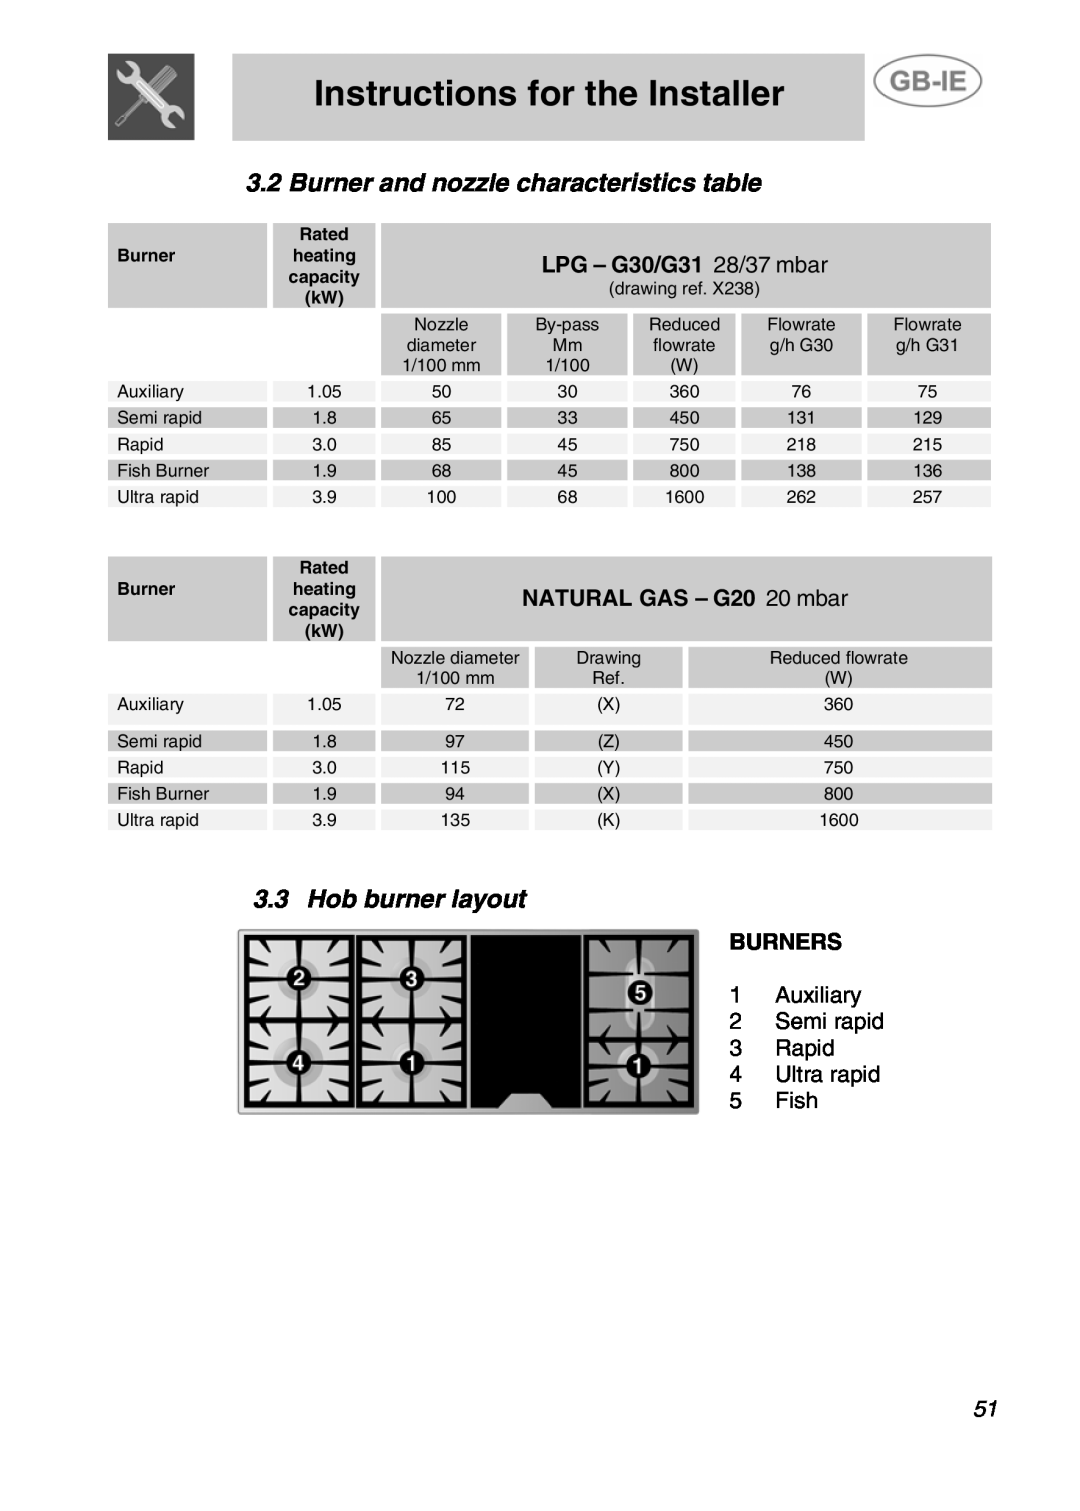 Smeg A4-5 Burner and nozzle characteristics table, Hob burner layout, LPG – G30/G31 28/37 mbar, NATURAL GAS – G20 20 mbar 